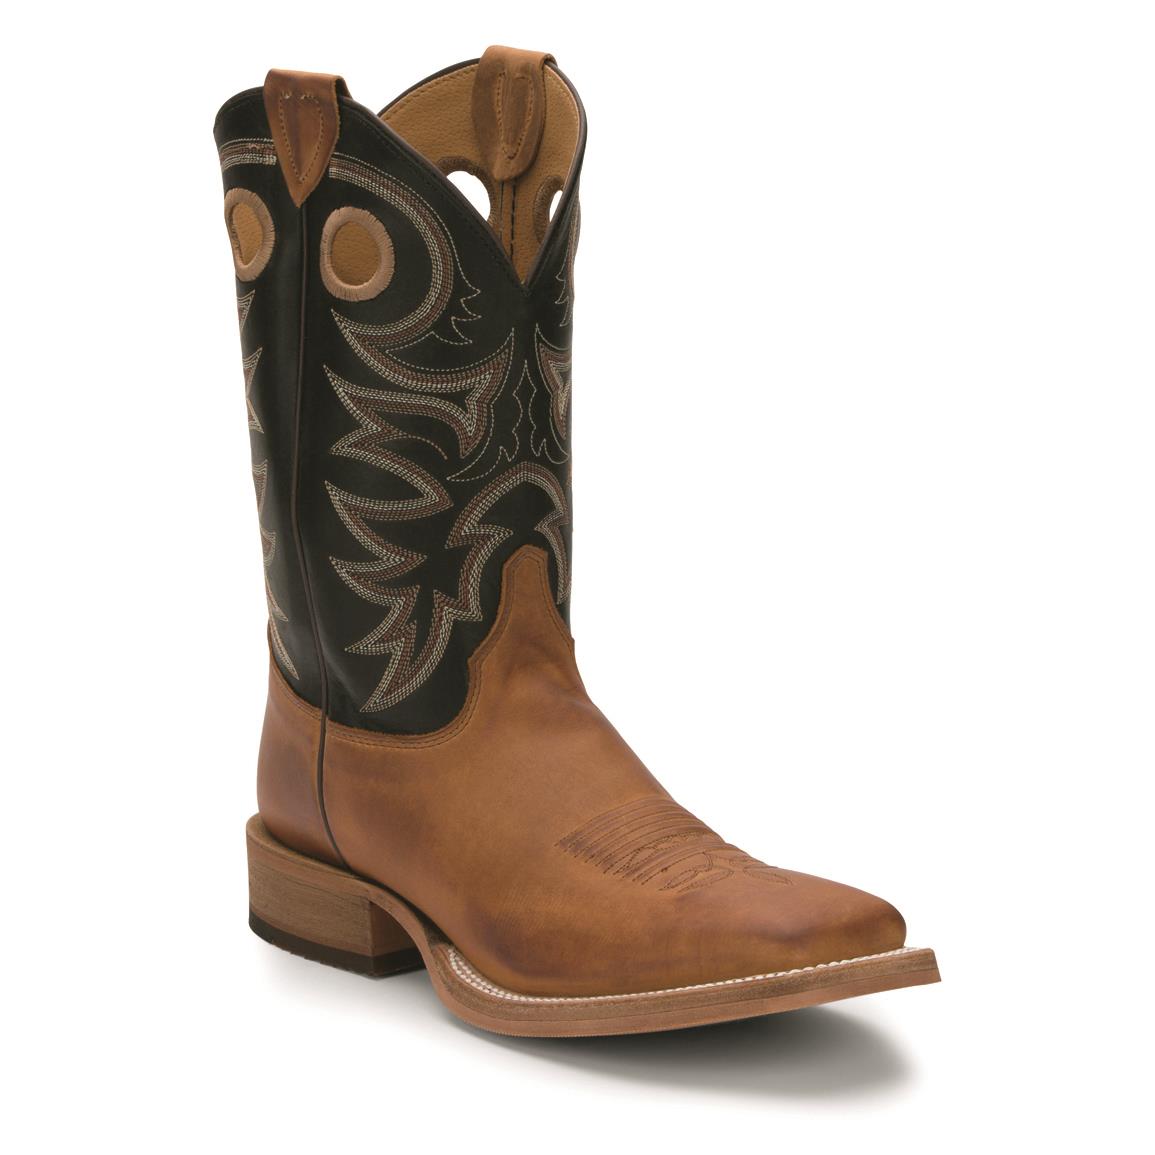 Justin Men's Caddo Western Boots, Tobacco/black